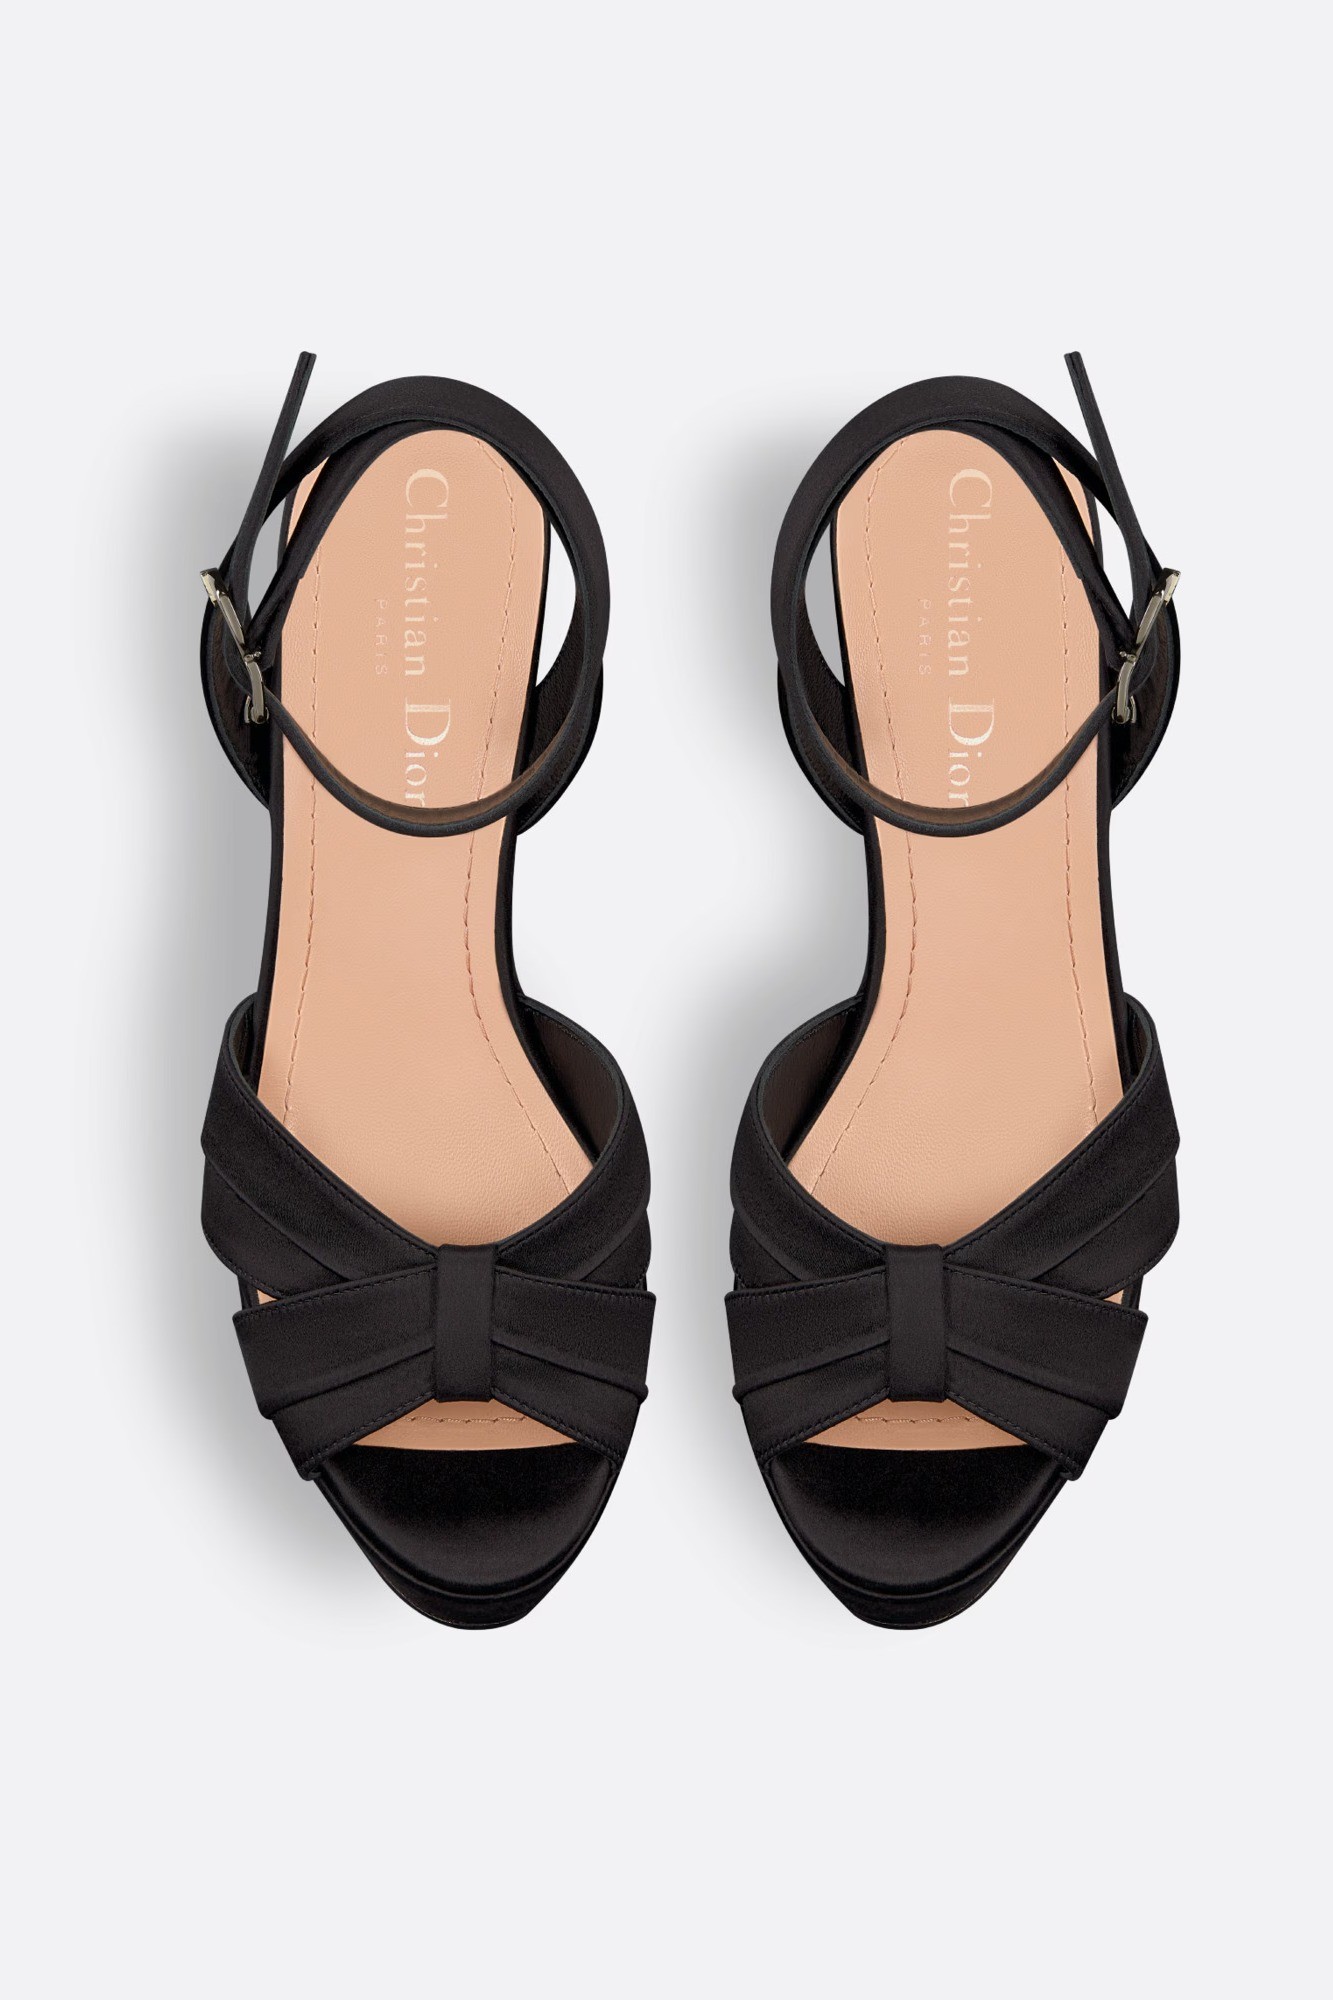 Muse Dior Heeled Sandal - Black